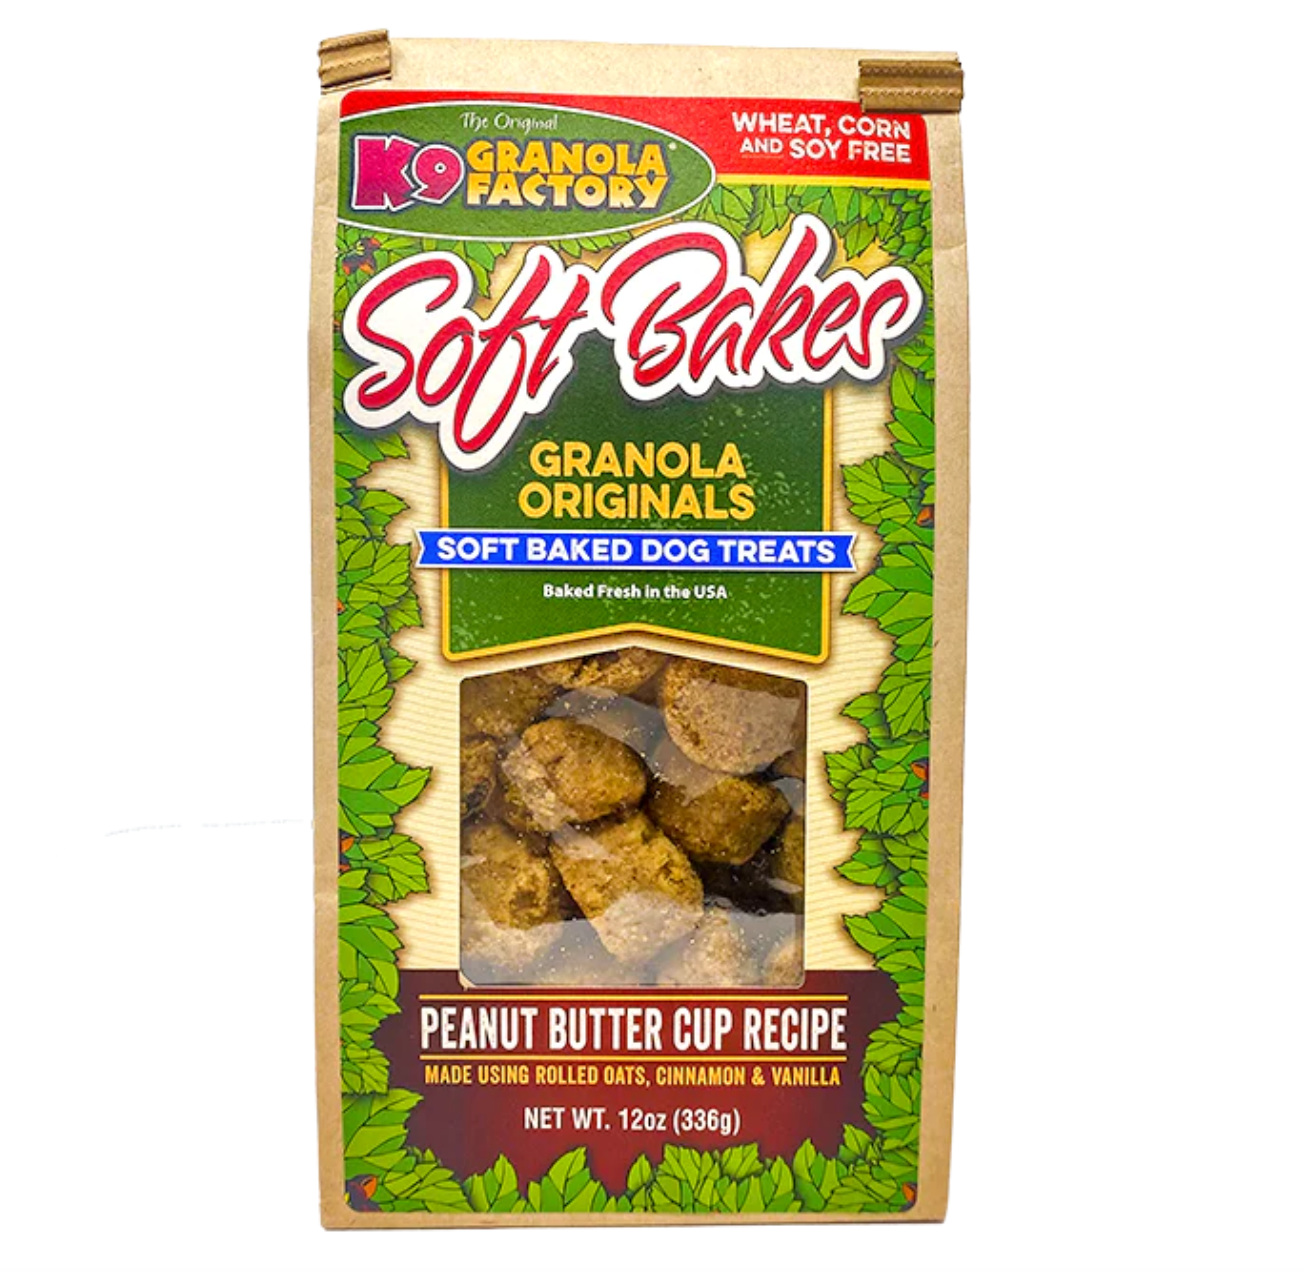 K9 Granola Factory "Soft Bakes" Dog Treats, Peanut Butter Cup Recipe